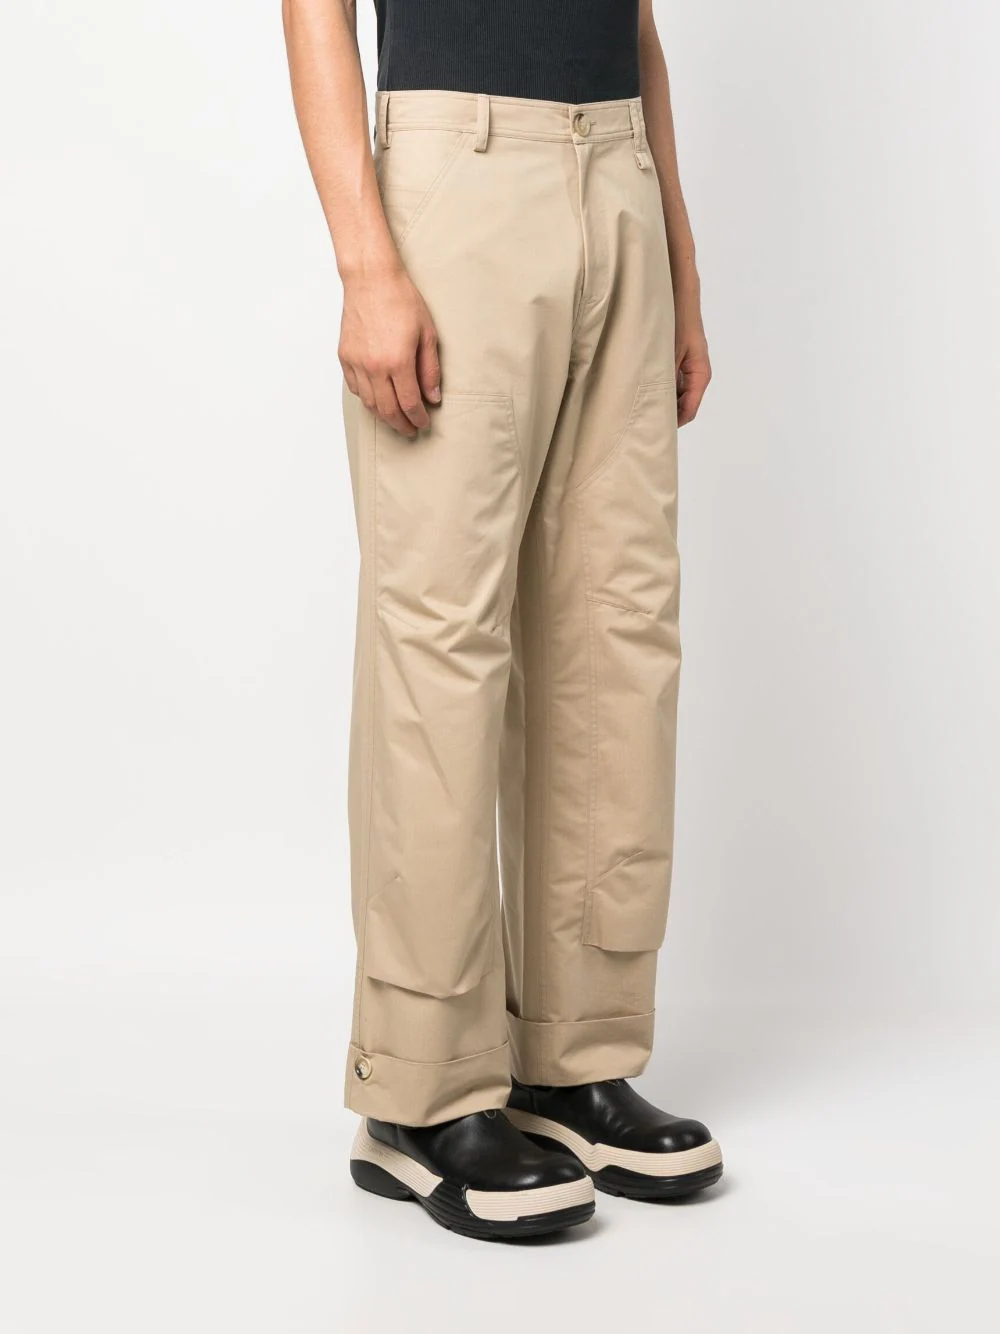 Simone-Rocha-Workwear-Trouser-Paper-Cotton-Natural-3